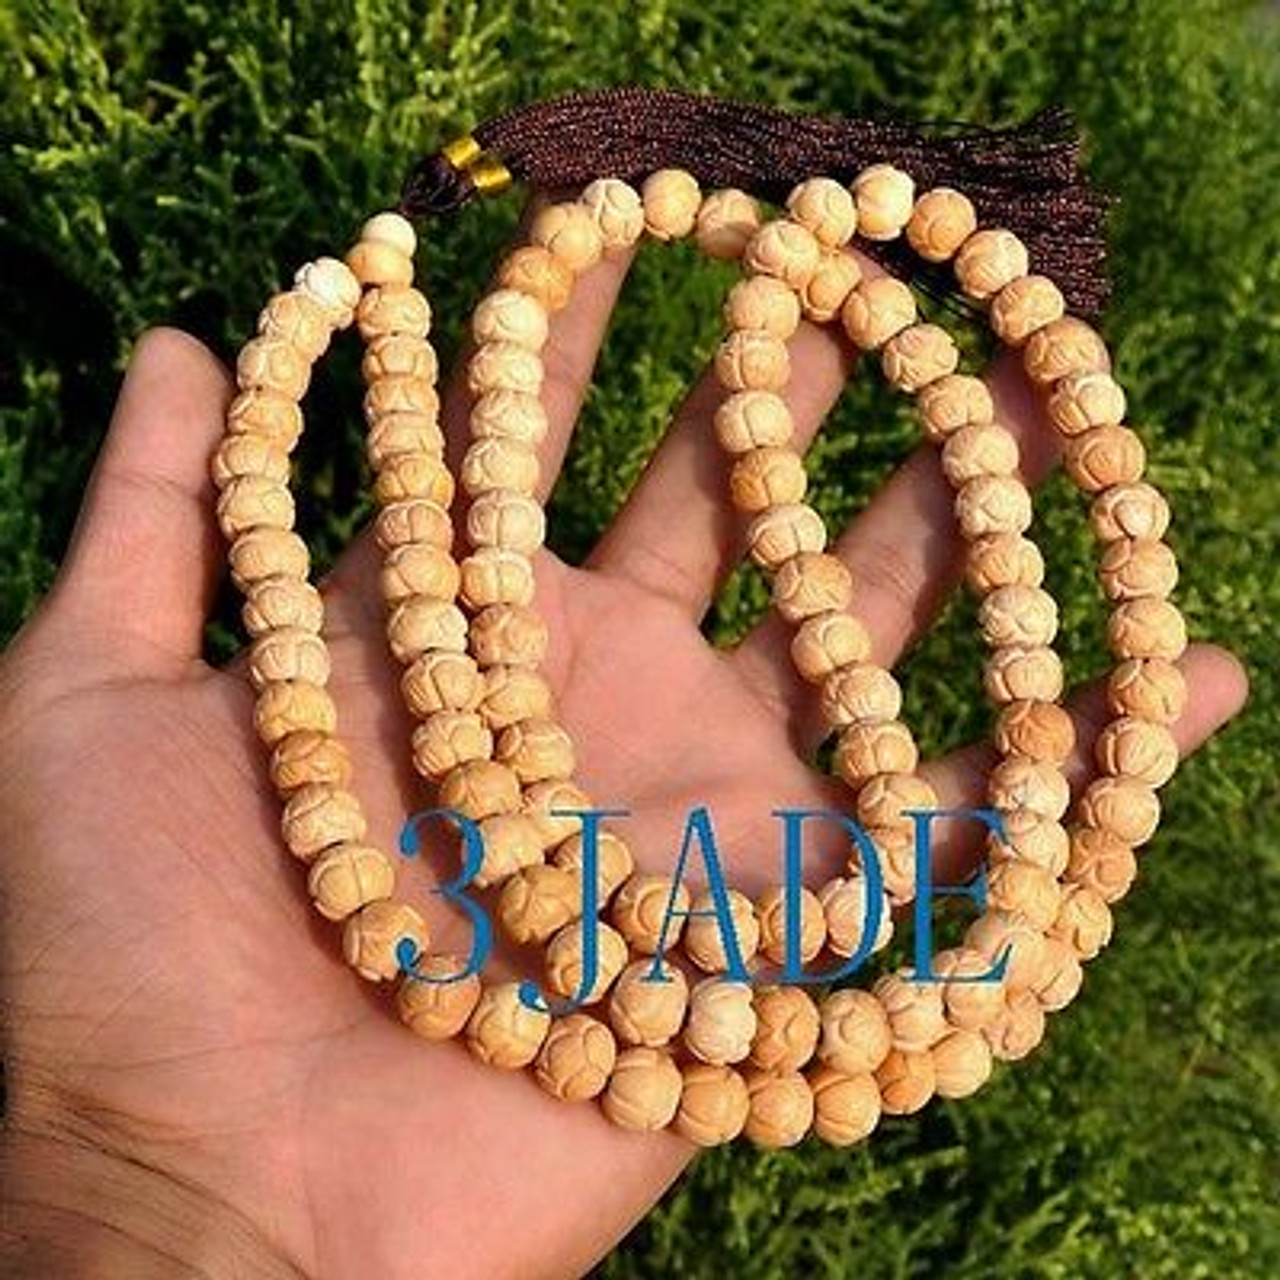 Tibetan 108 Carved Bone Meditation Mantra Yoga Prayer Beads Mala - 3JADE  wholesale of jade carvings, jewelry, collectables, prayer beads